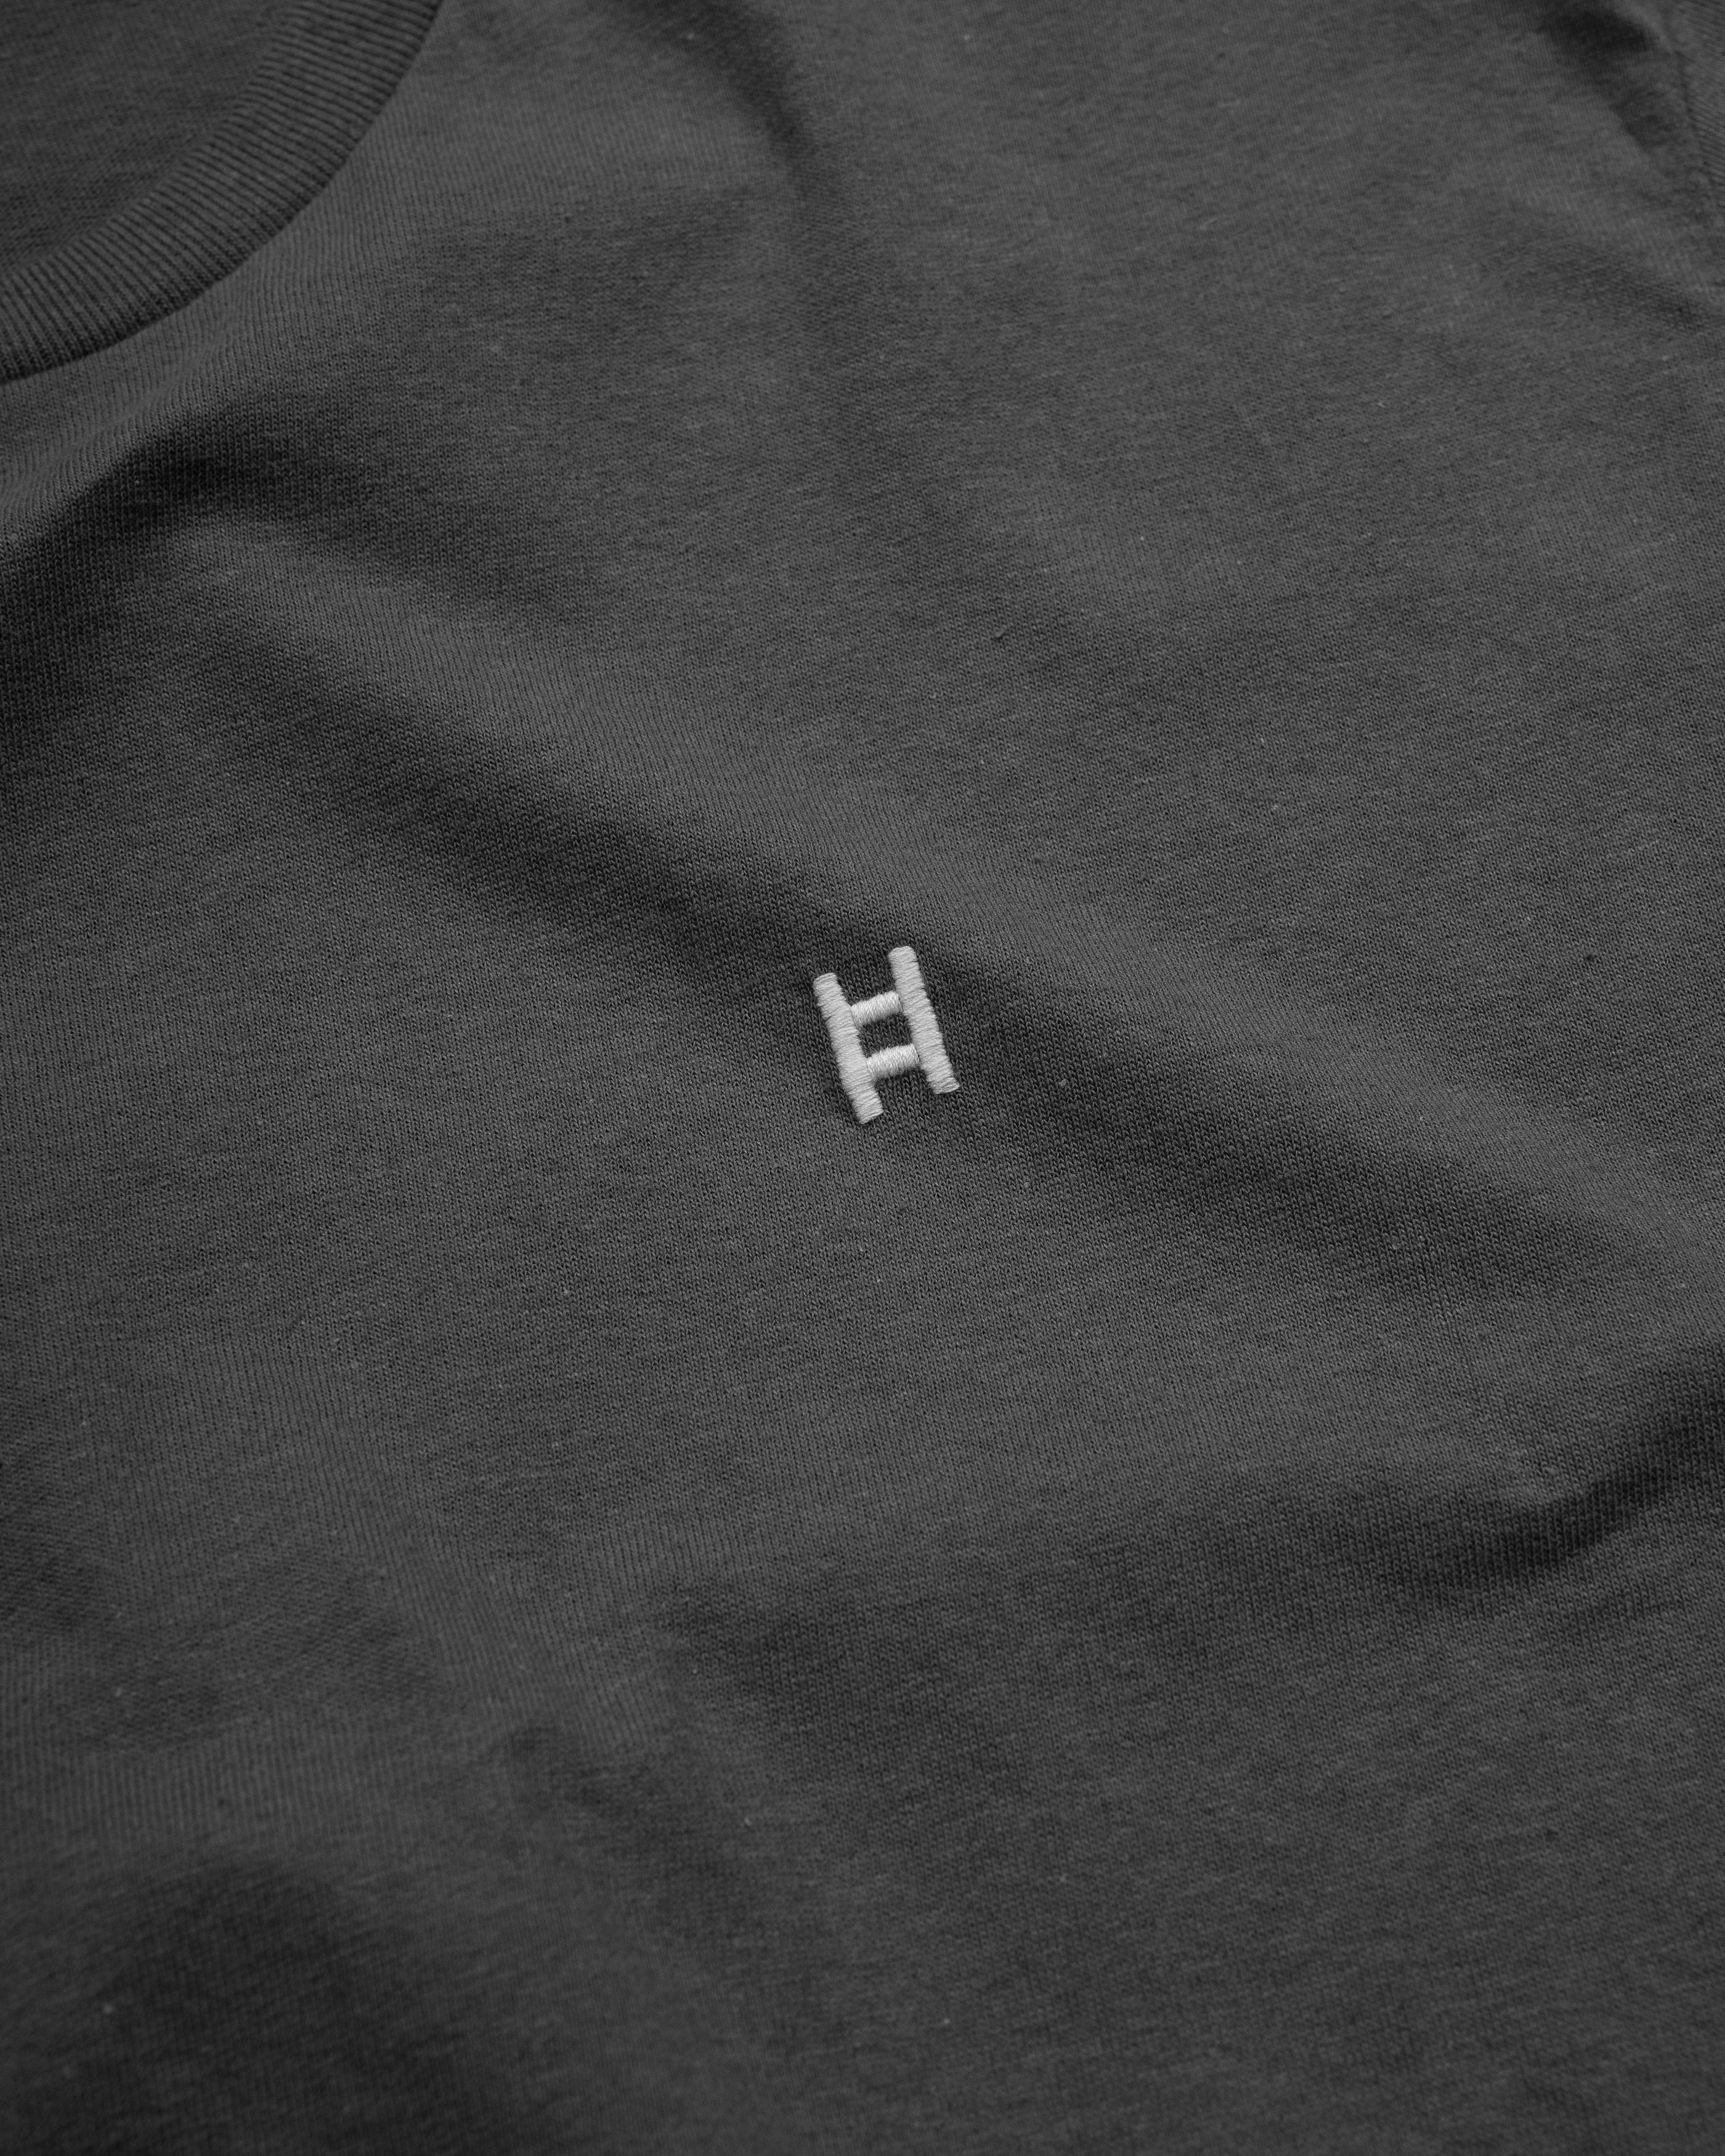 Camiseta H bordada